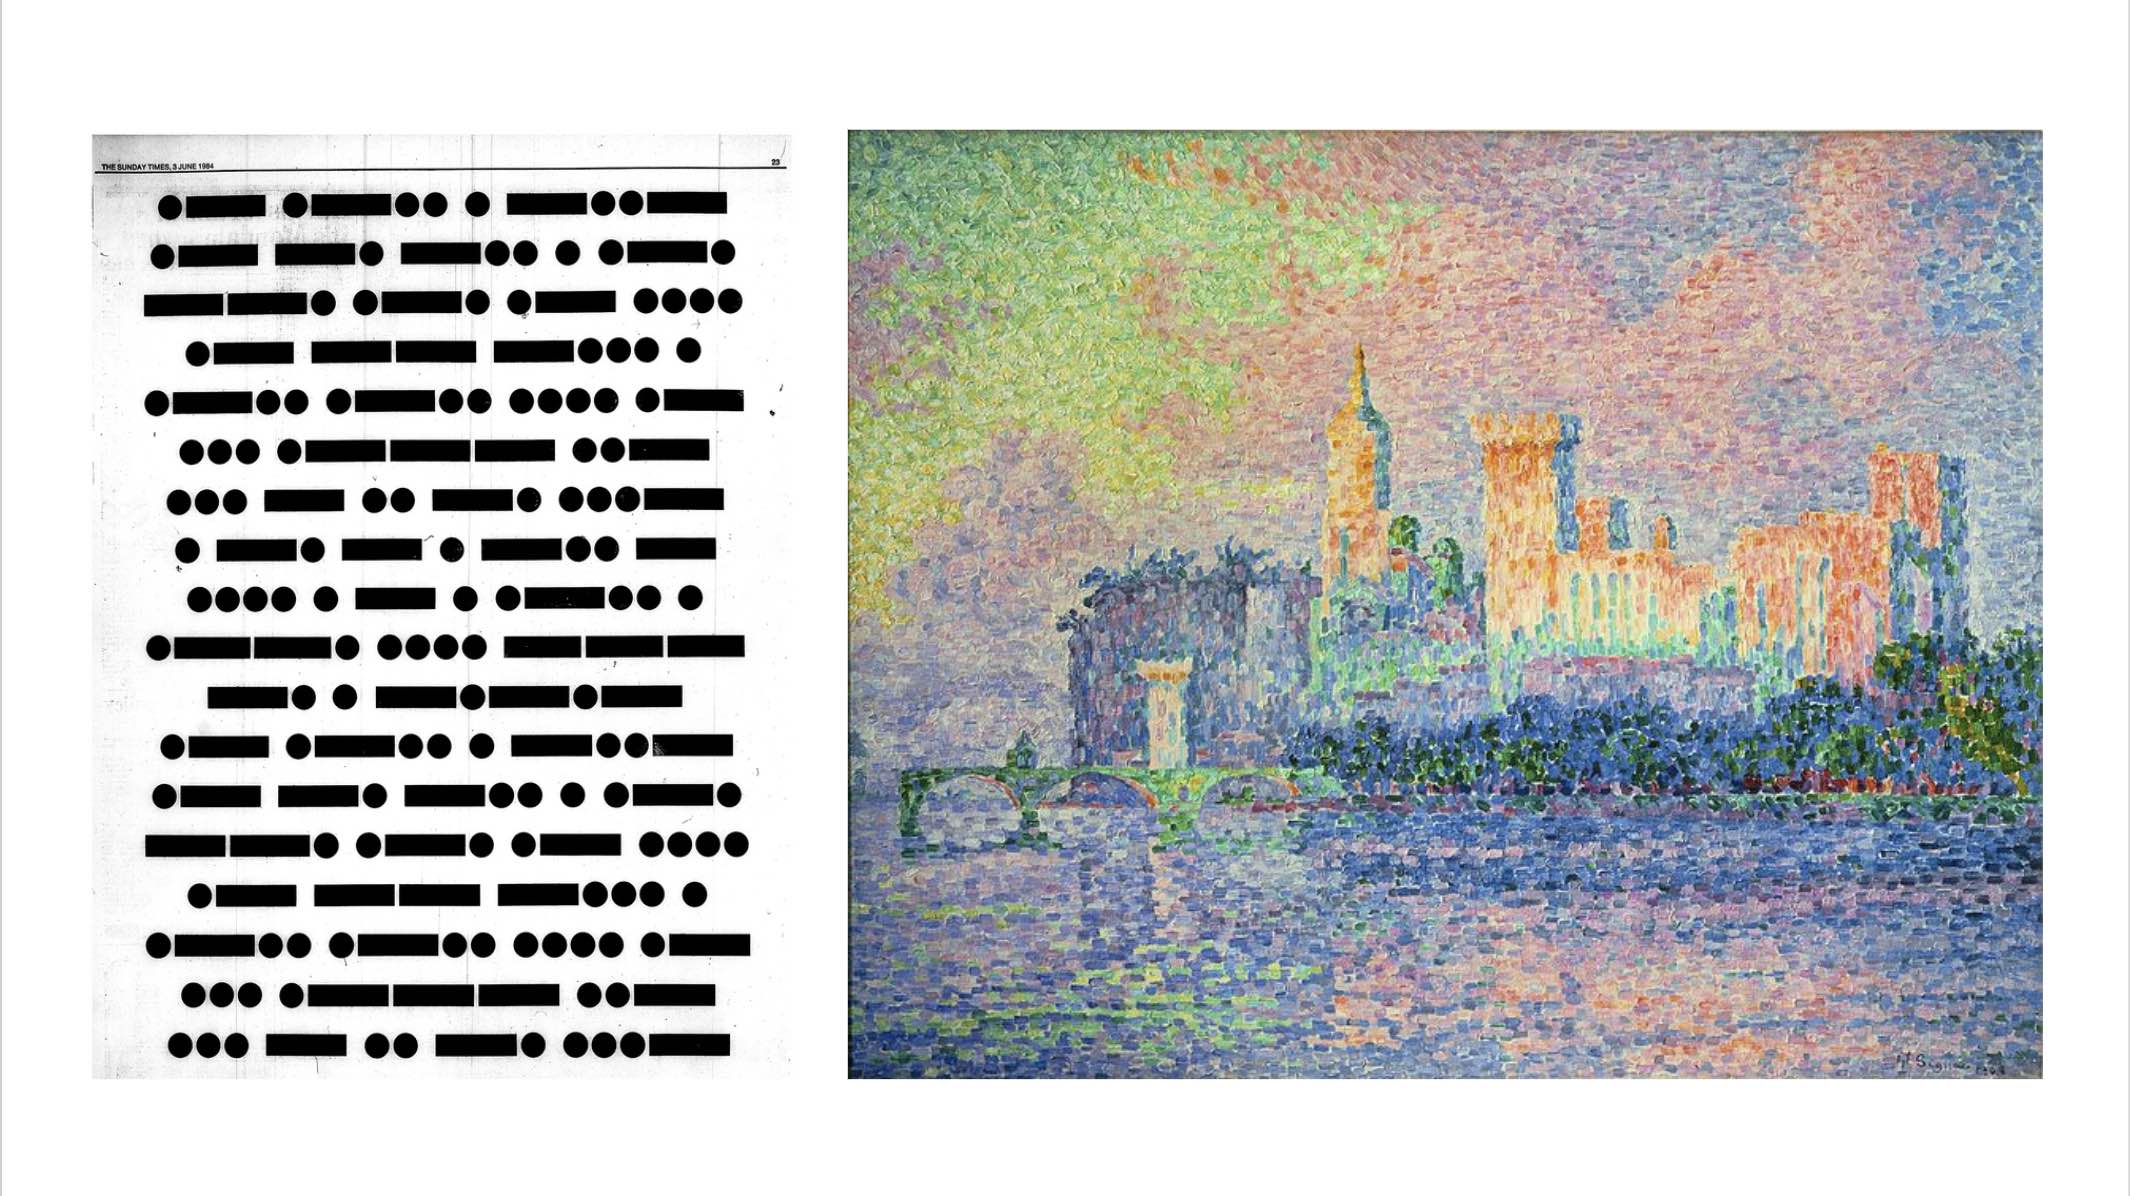 morse code vs pointillism